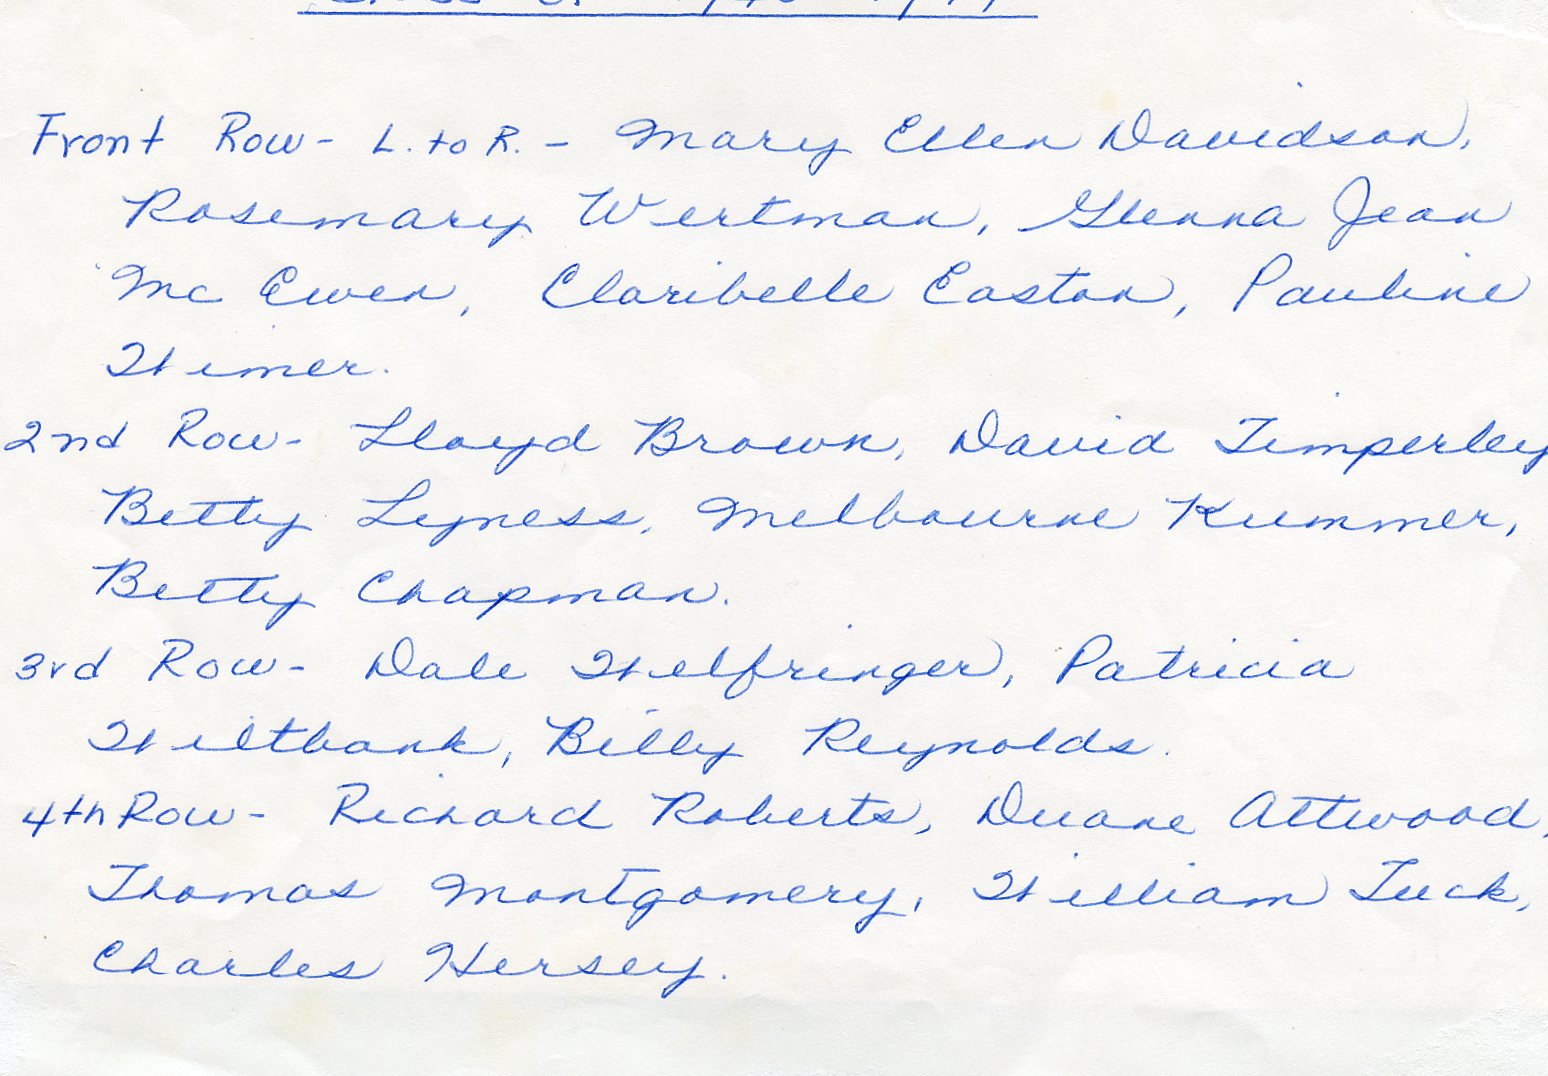 1944 8th names